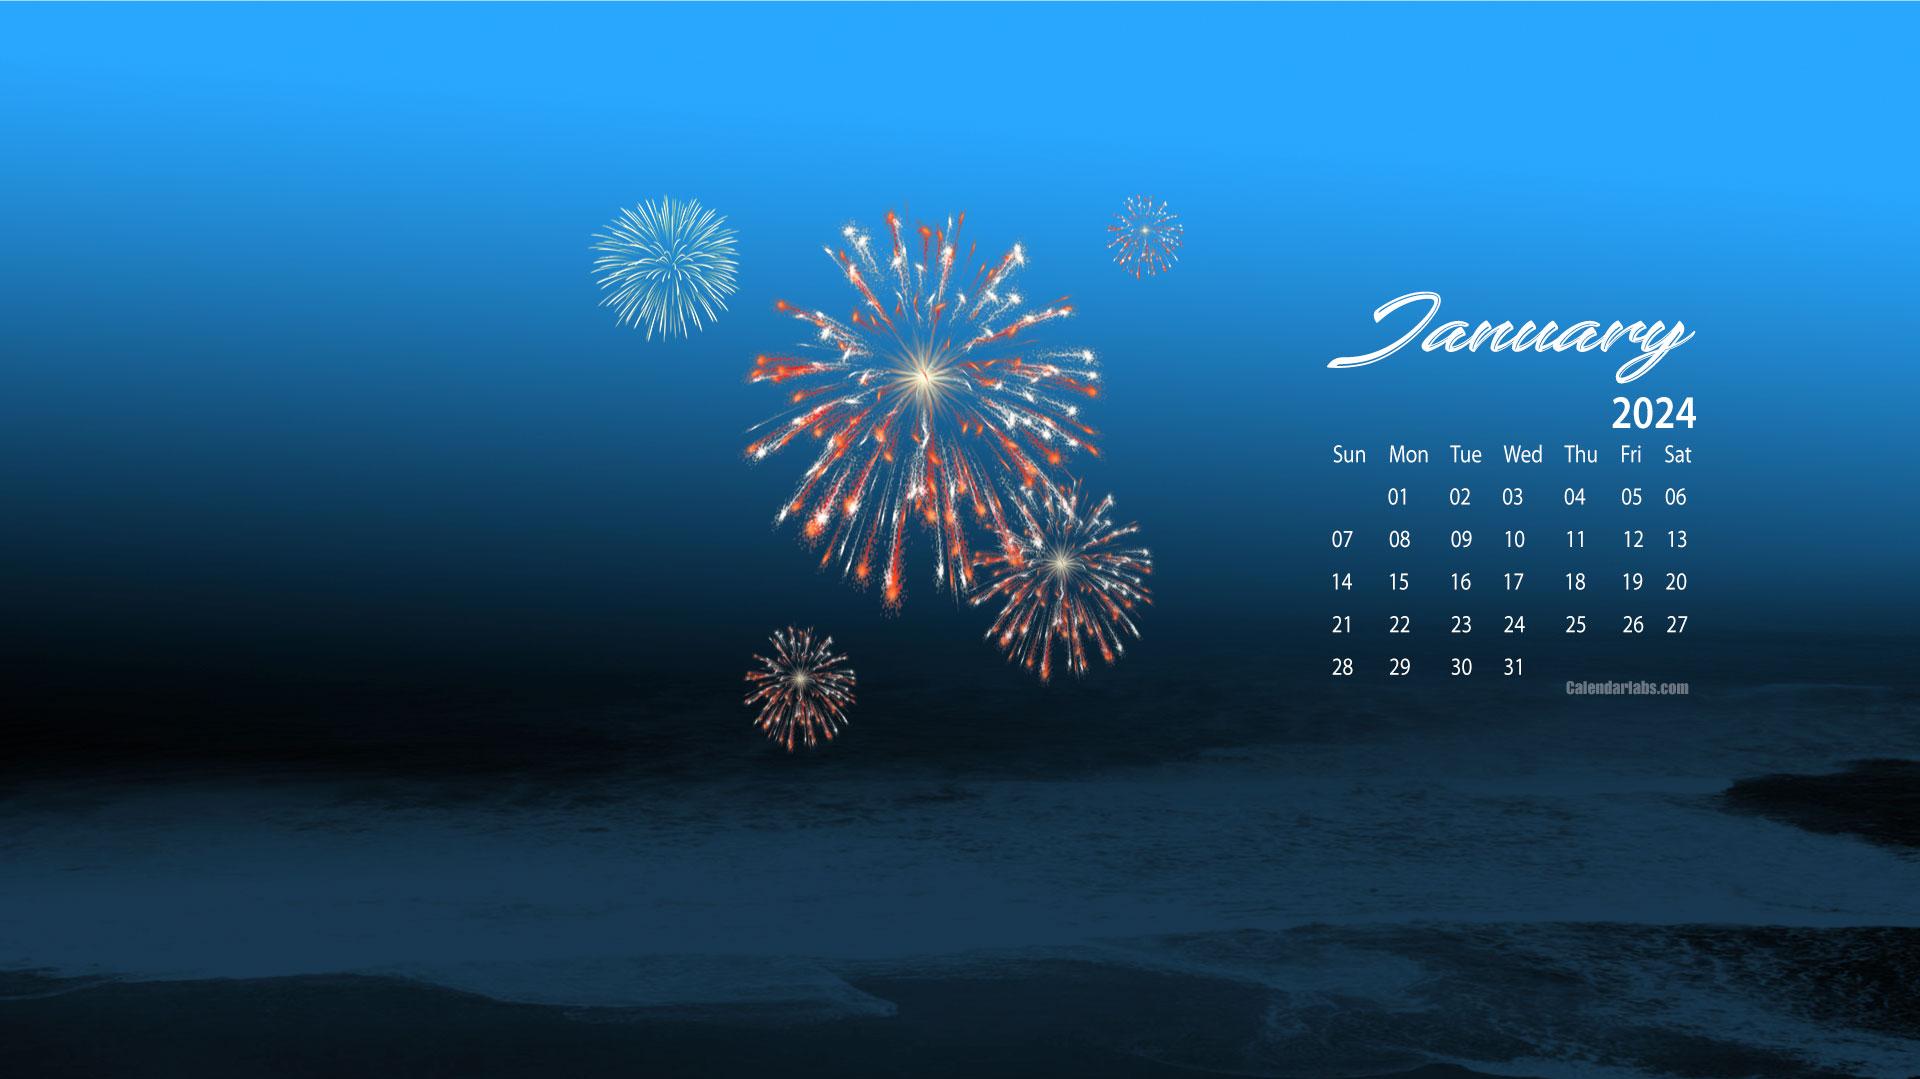 January Desktop Wallpaper Calendar Calendarlabs